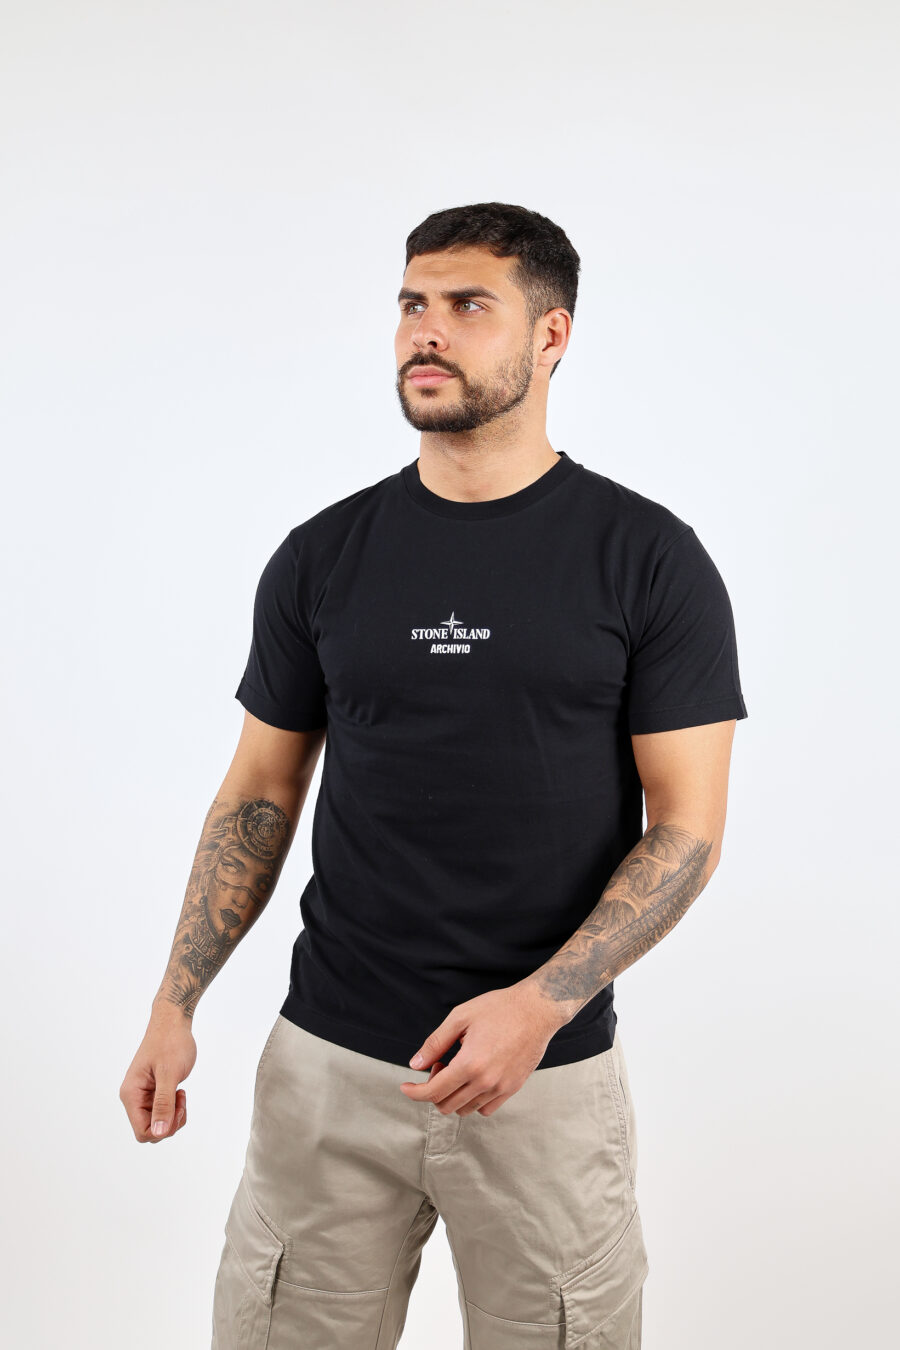 T-shirt preta com mini-logotipo "archivio" centrado - BLS Fashion 152